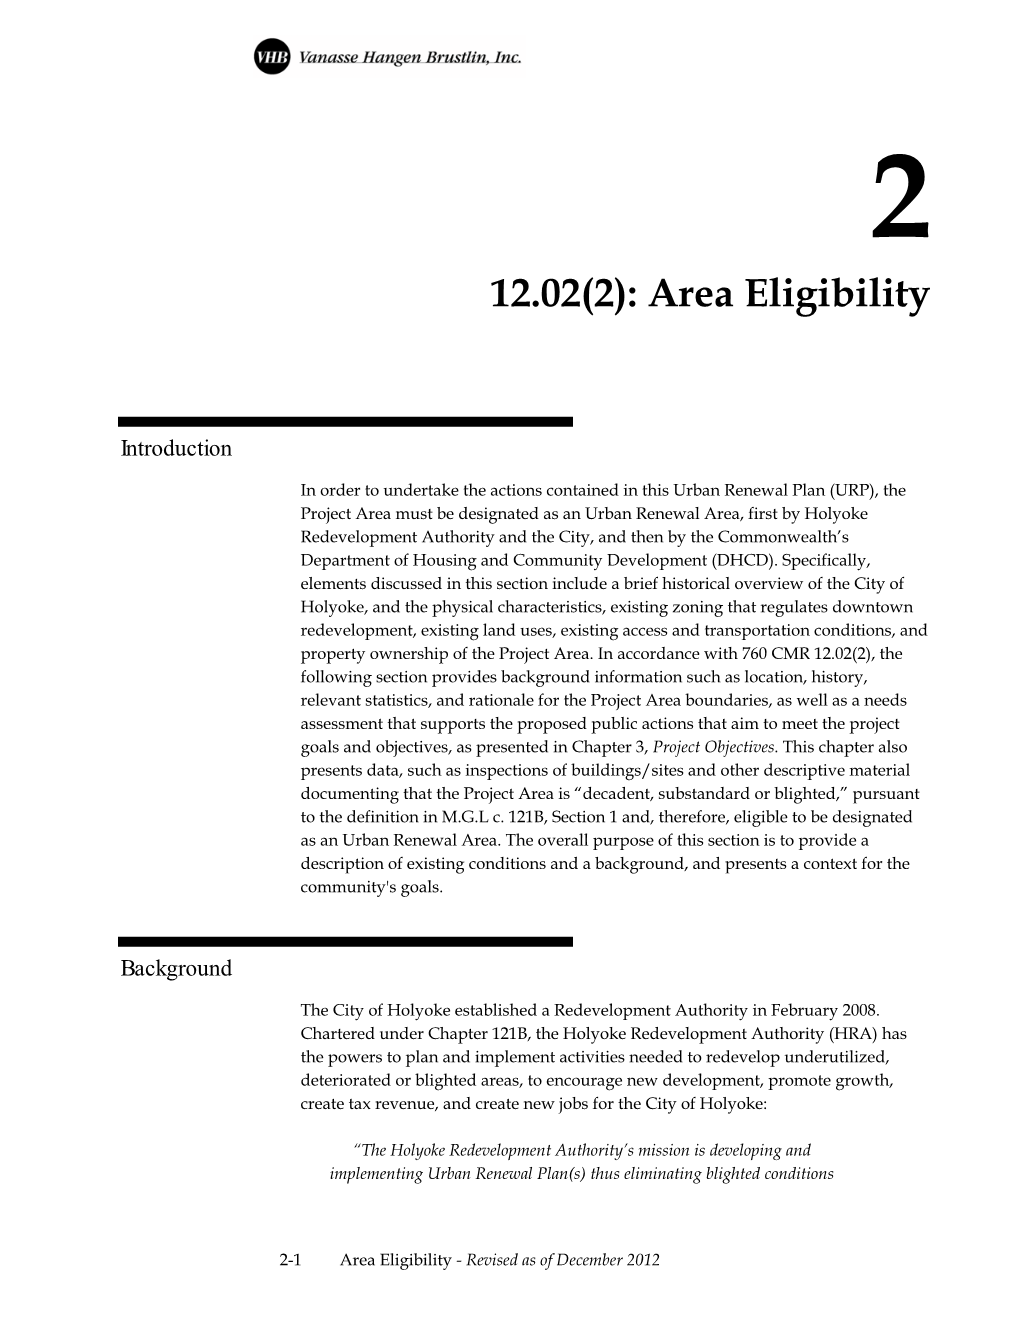 12.02(2): Area Eligibility